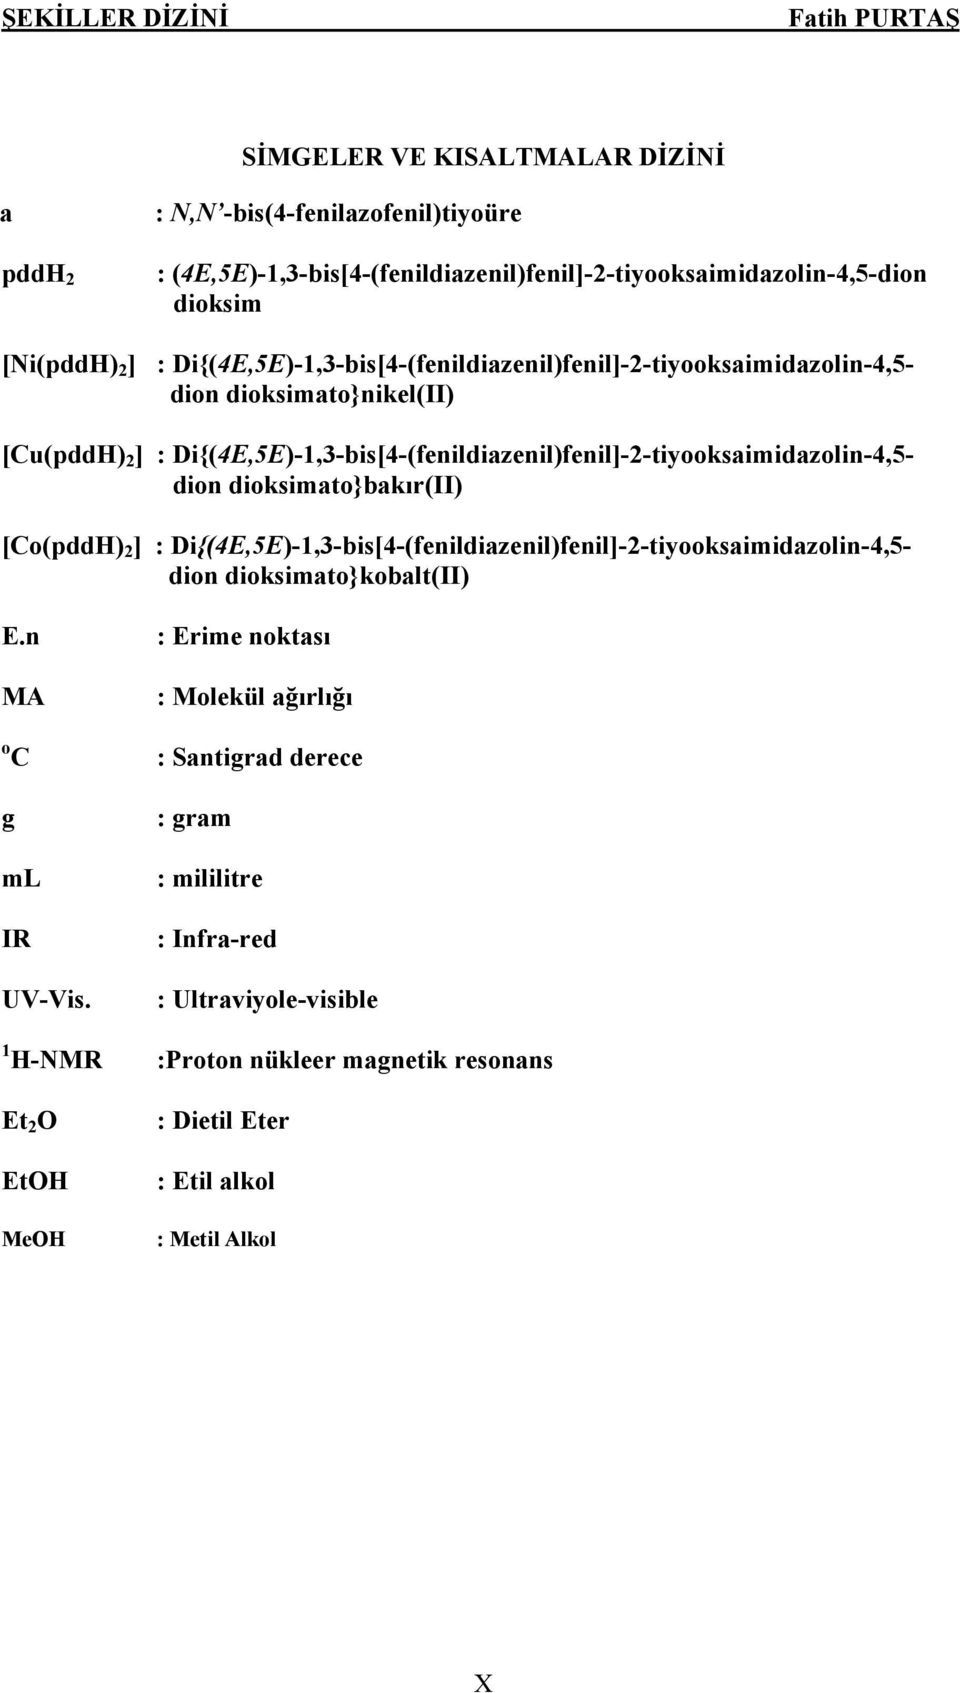 dion dioksimato}bakır(ii) [Co(pdd) 2 ] : Di{(4E,5E)-1,3-bis[4-(fenildiazenil)fenil]-2-tiyooksaimidazolin-4,5- dion dioksimato}kobalt(ii) E.n MA o C g ml I UV-Vis.